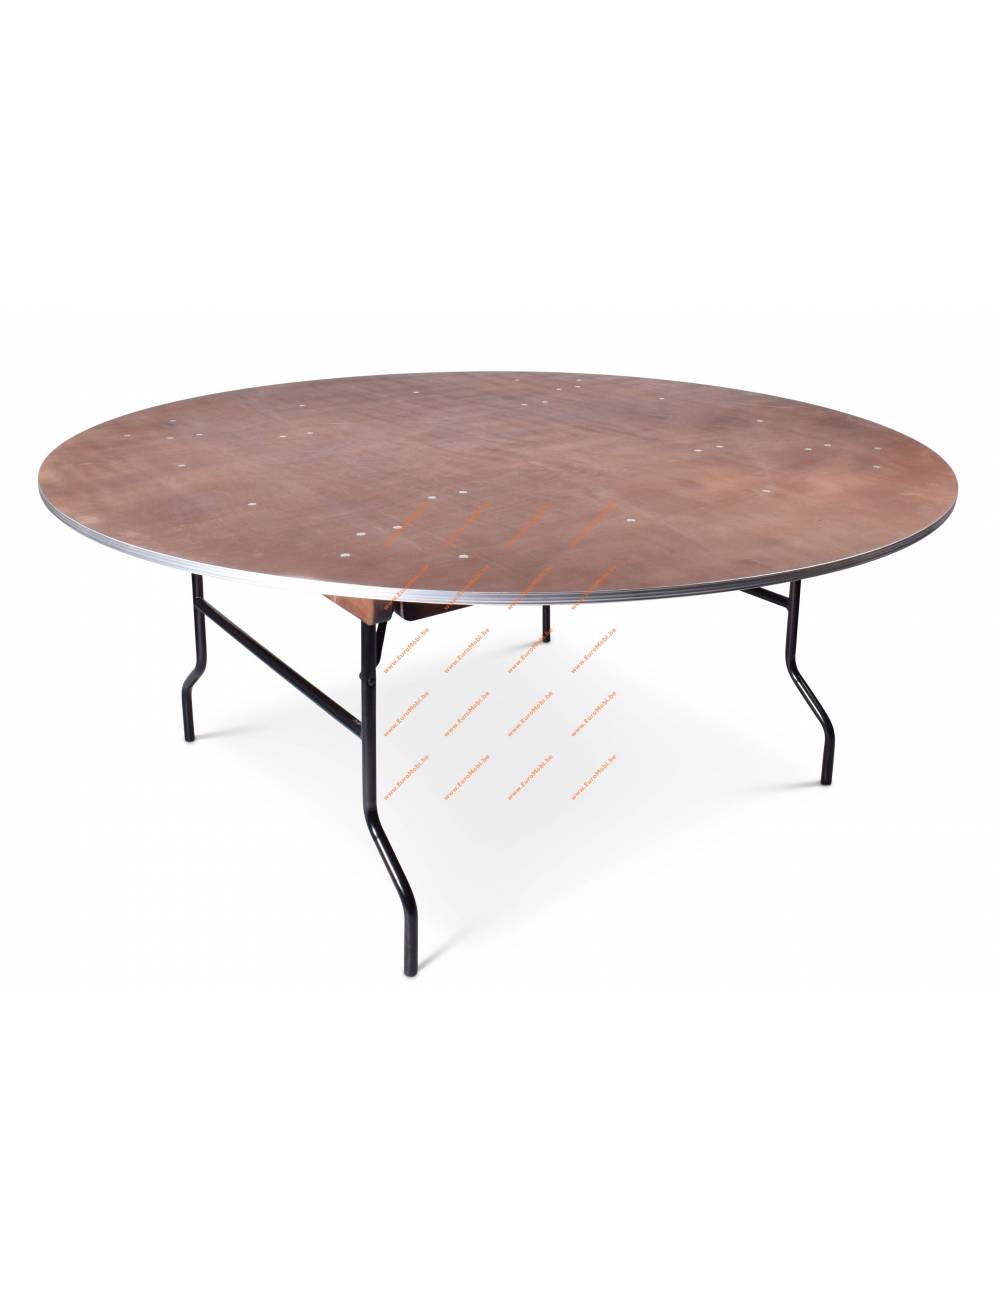 Table banquet pliante ronde Tacoma - 165cm de diamètre - Prix: 123,80 €